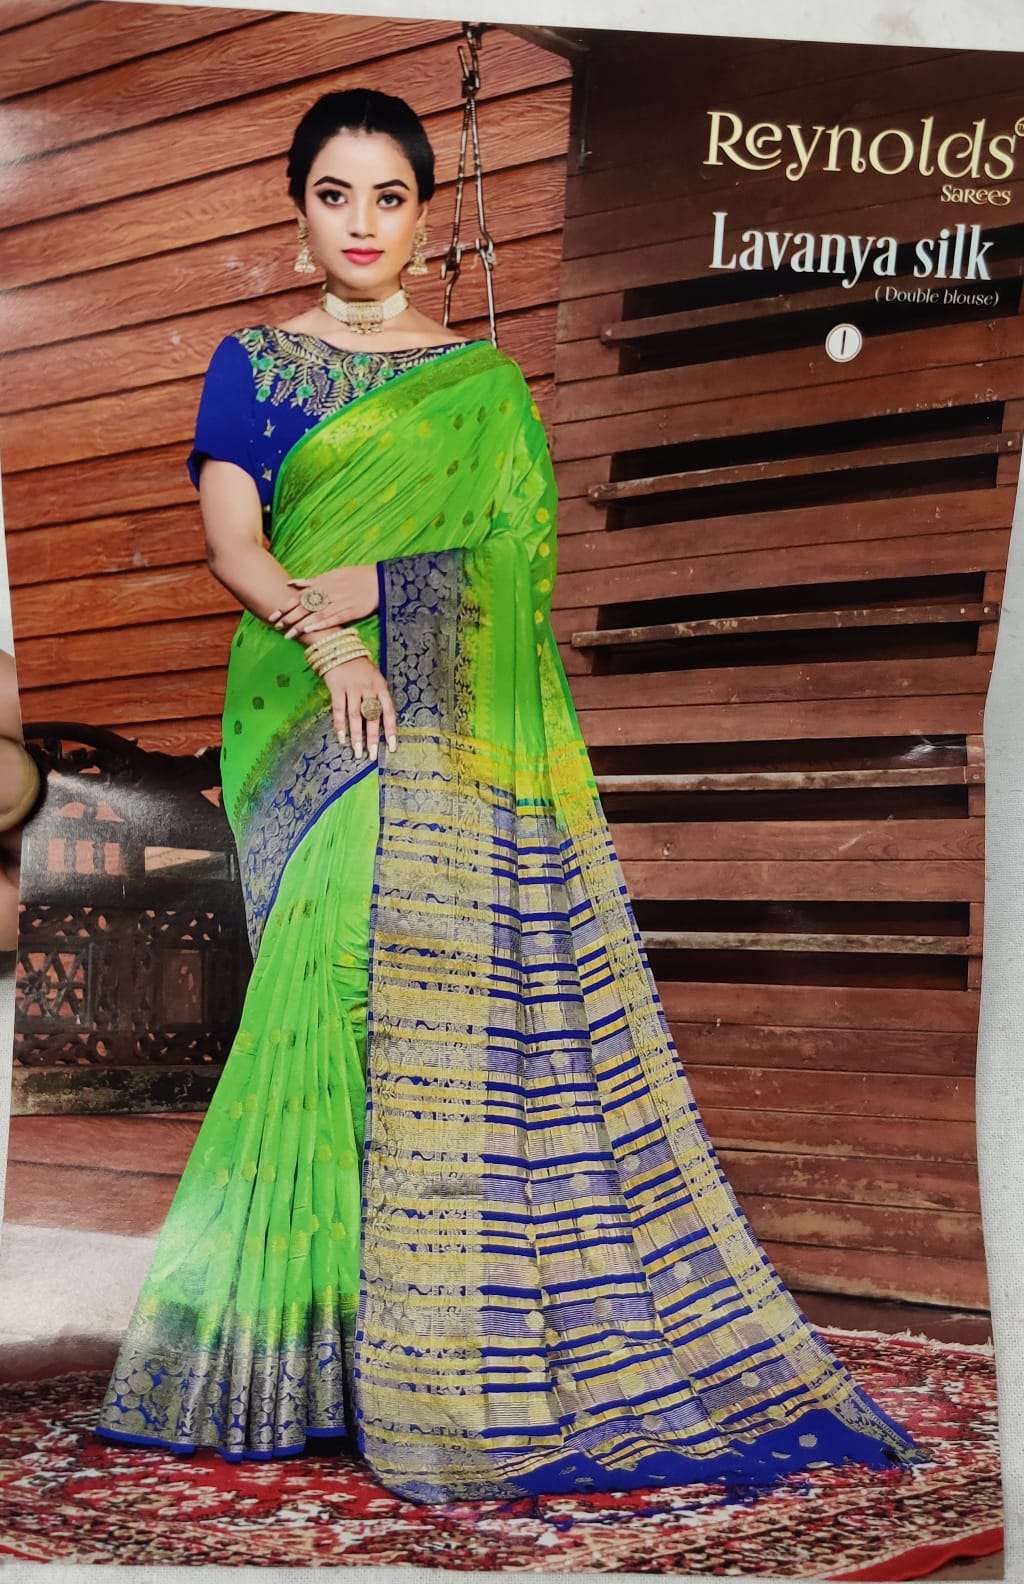 reynolds saree lavanya silk elegant saree with double blouse concept 